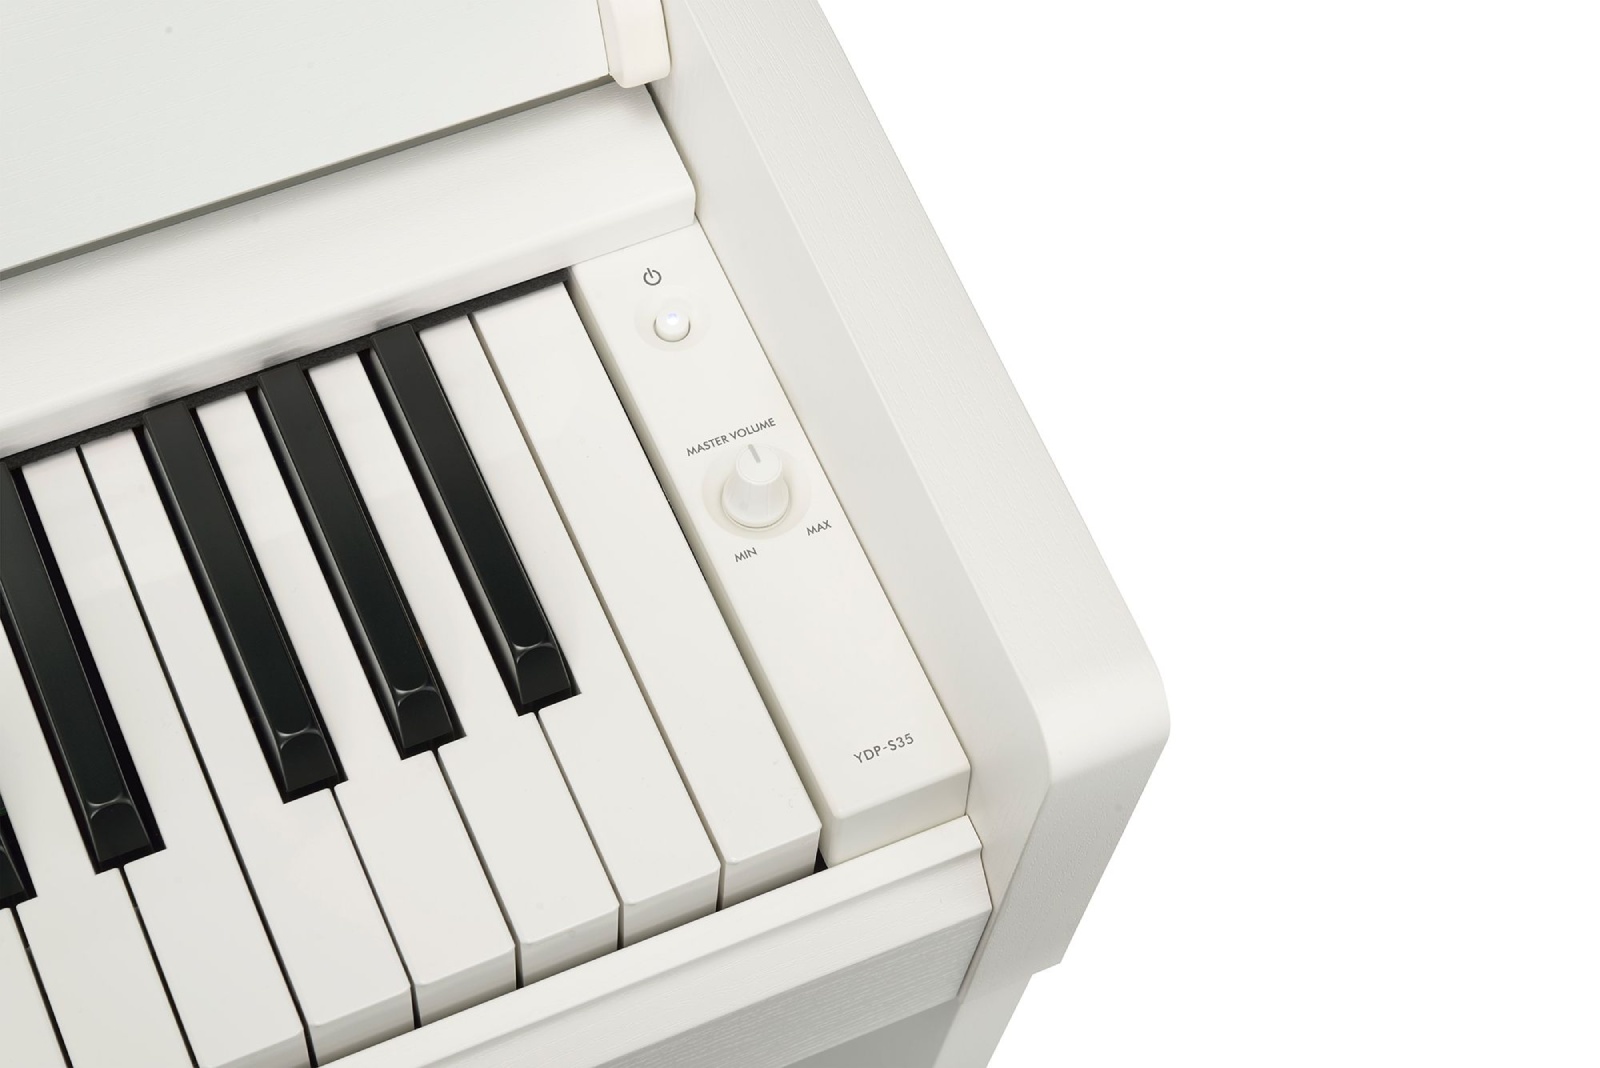 Yamaha Ydp-s35 Wh - Digitale piano met meubel - Variation 4